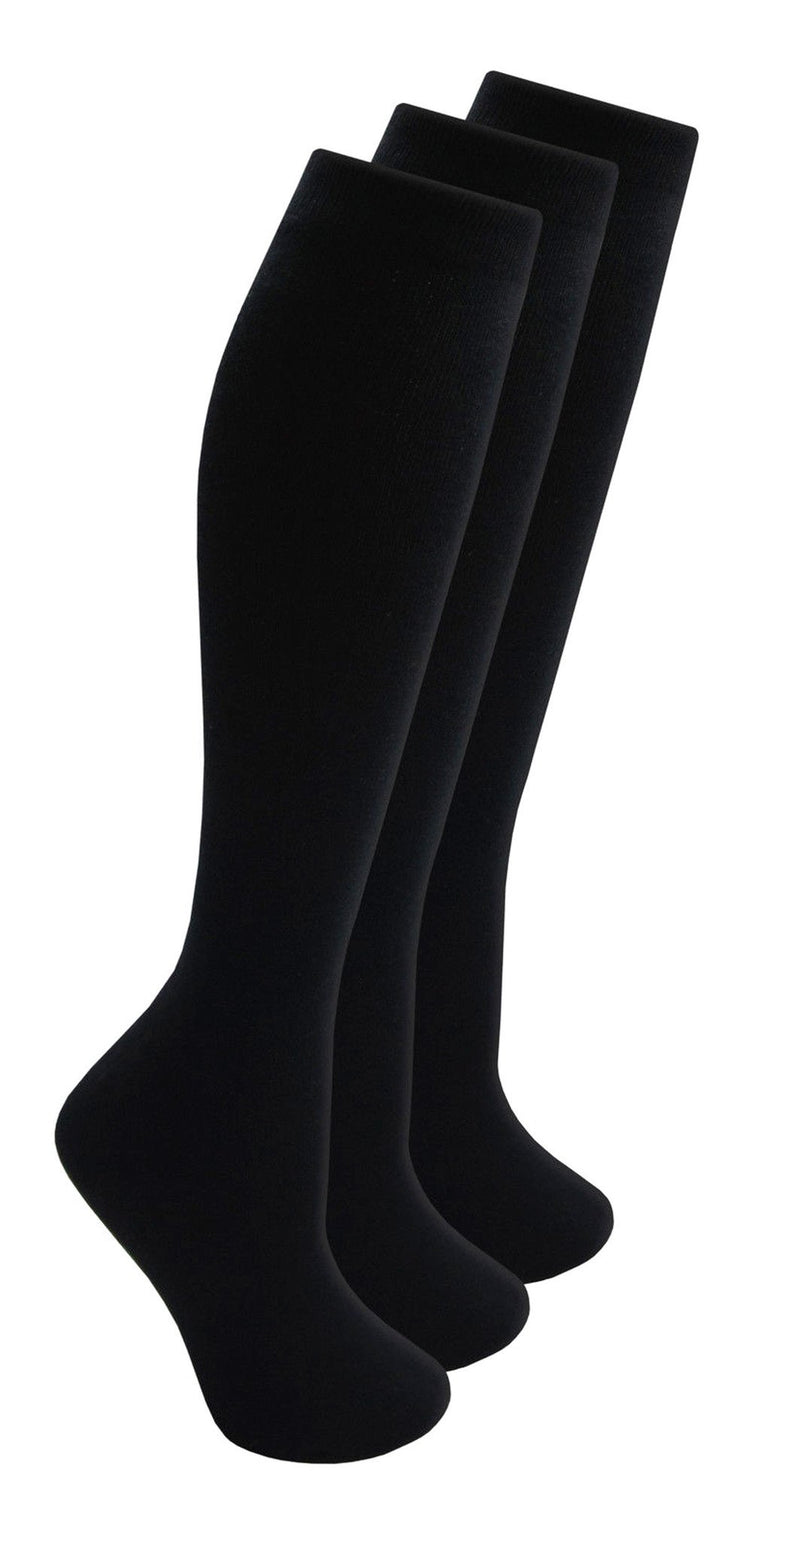 Black Plain Knee High Socks 4 Pack of 3 Pairs (43B425) - Kidswholesale.co.uk